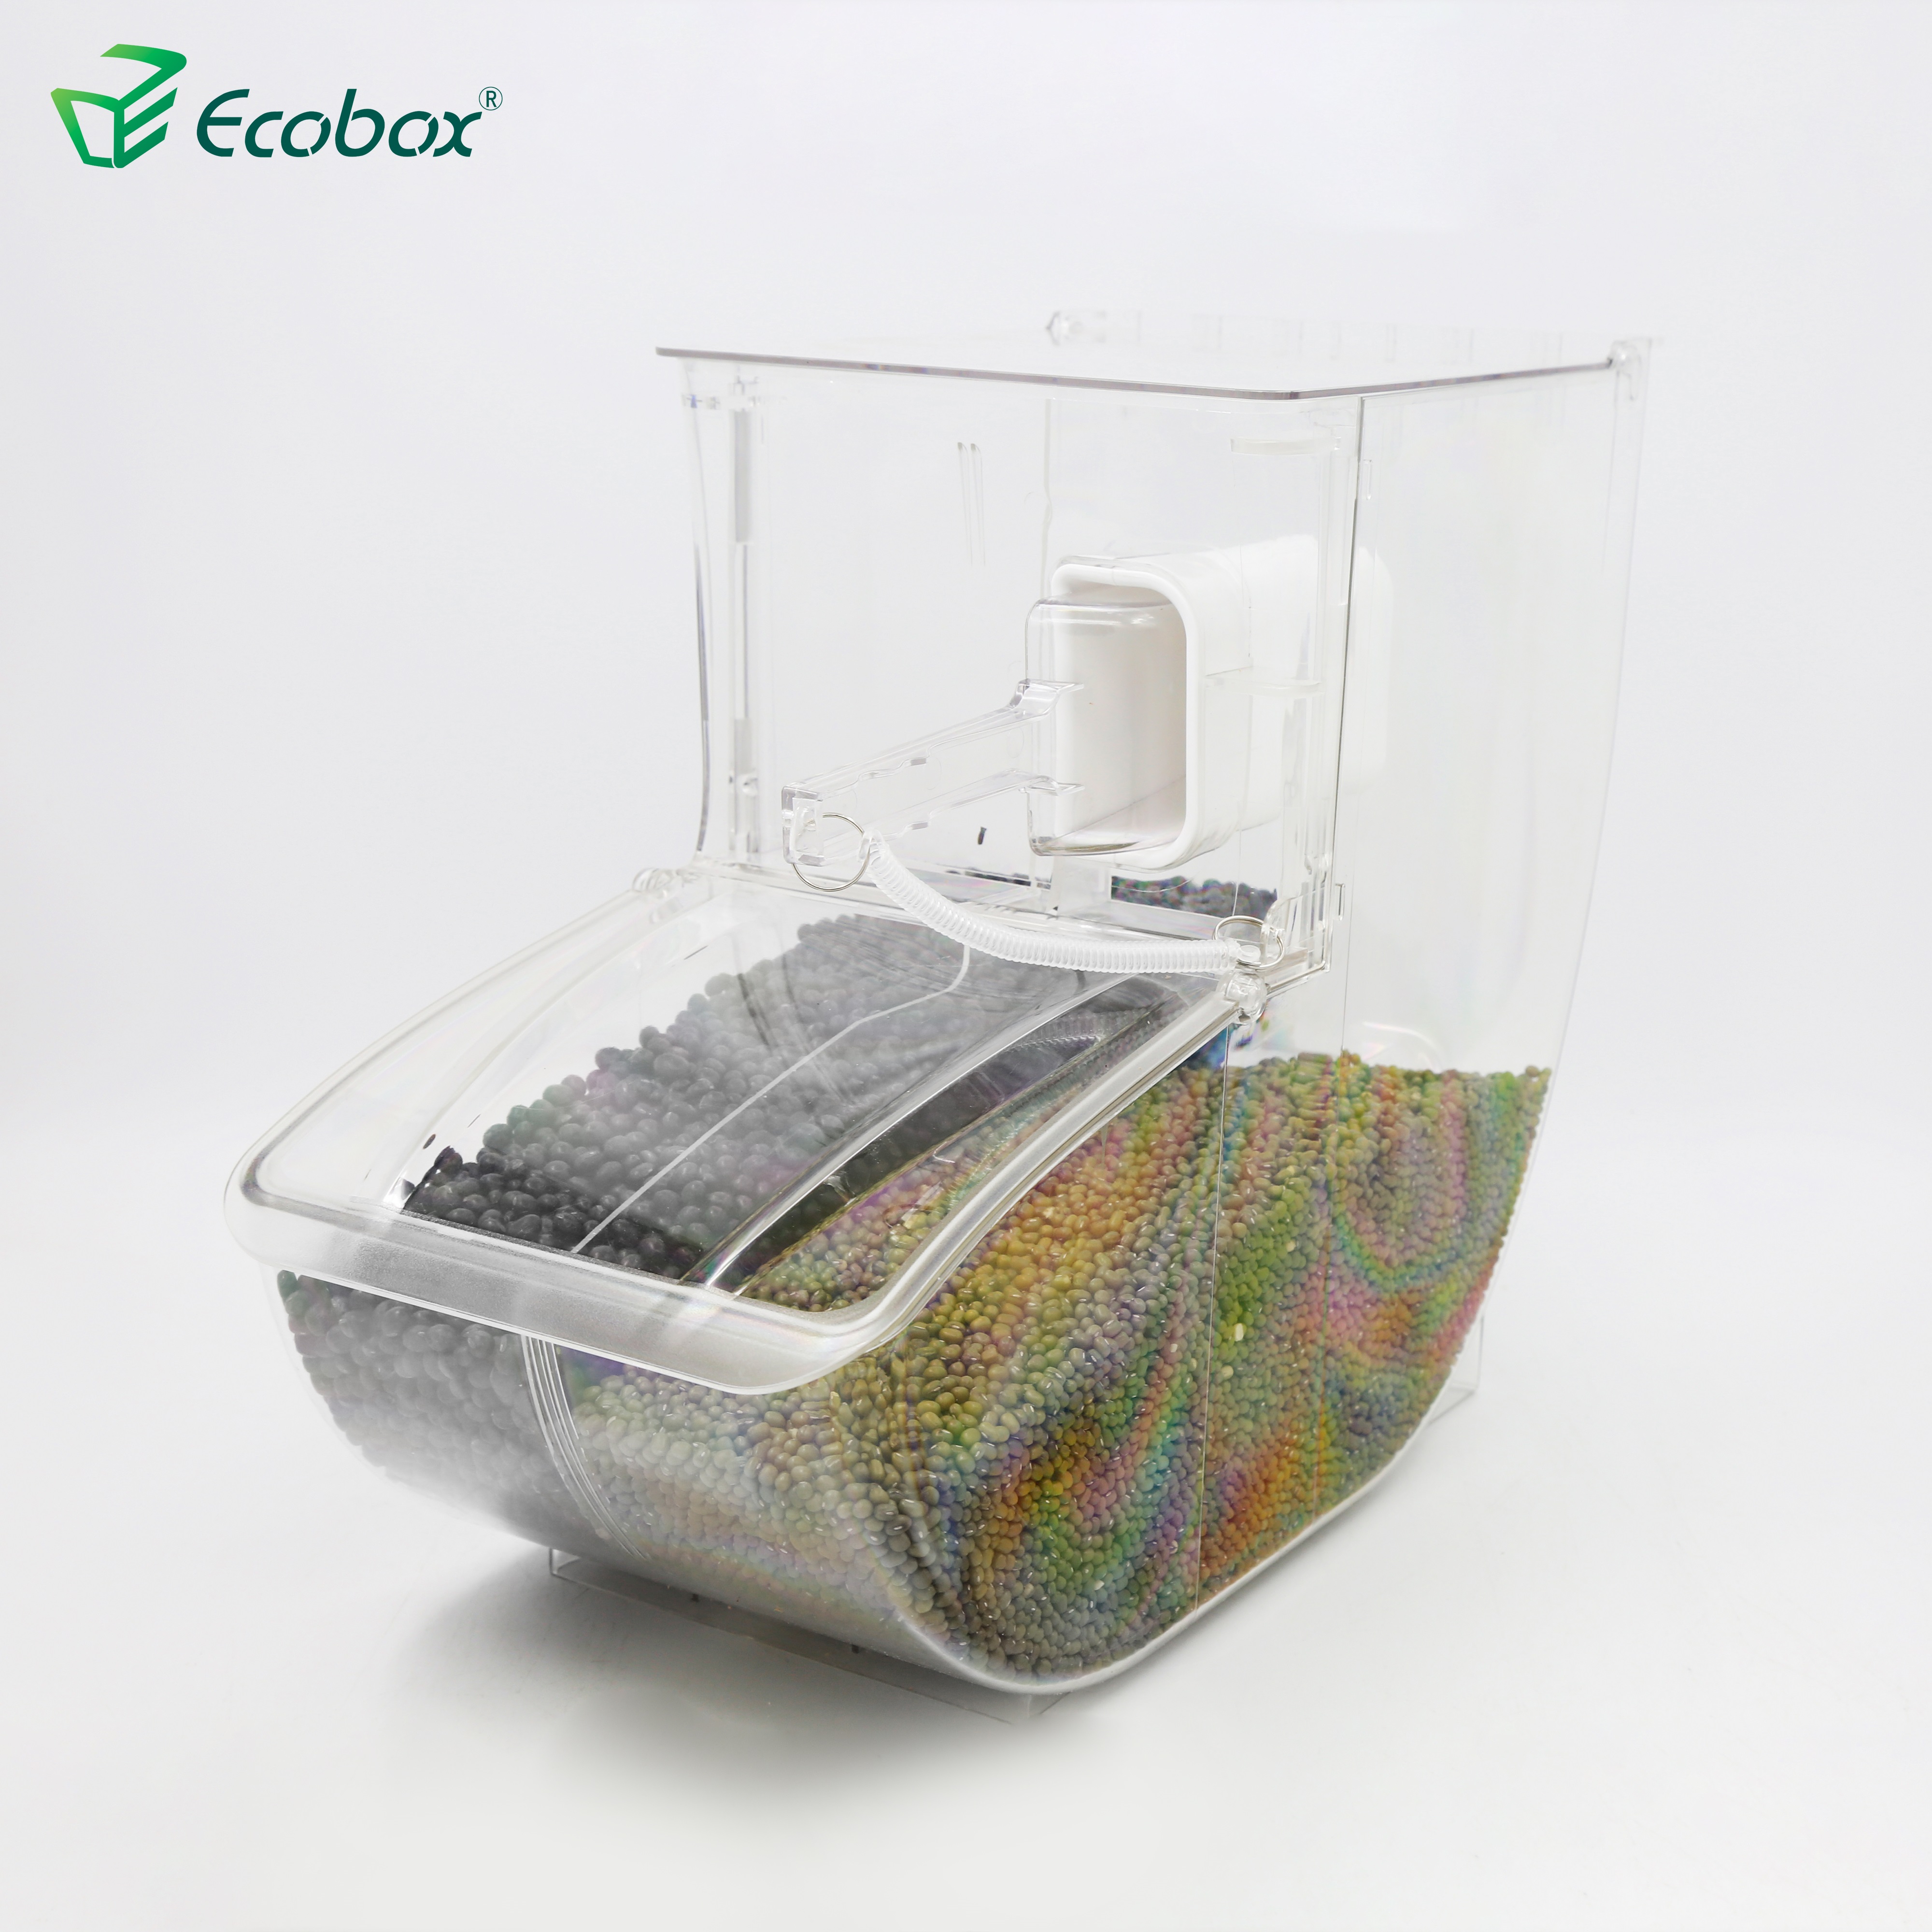  Ecobox SPH-002 Scoop bin